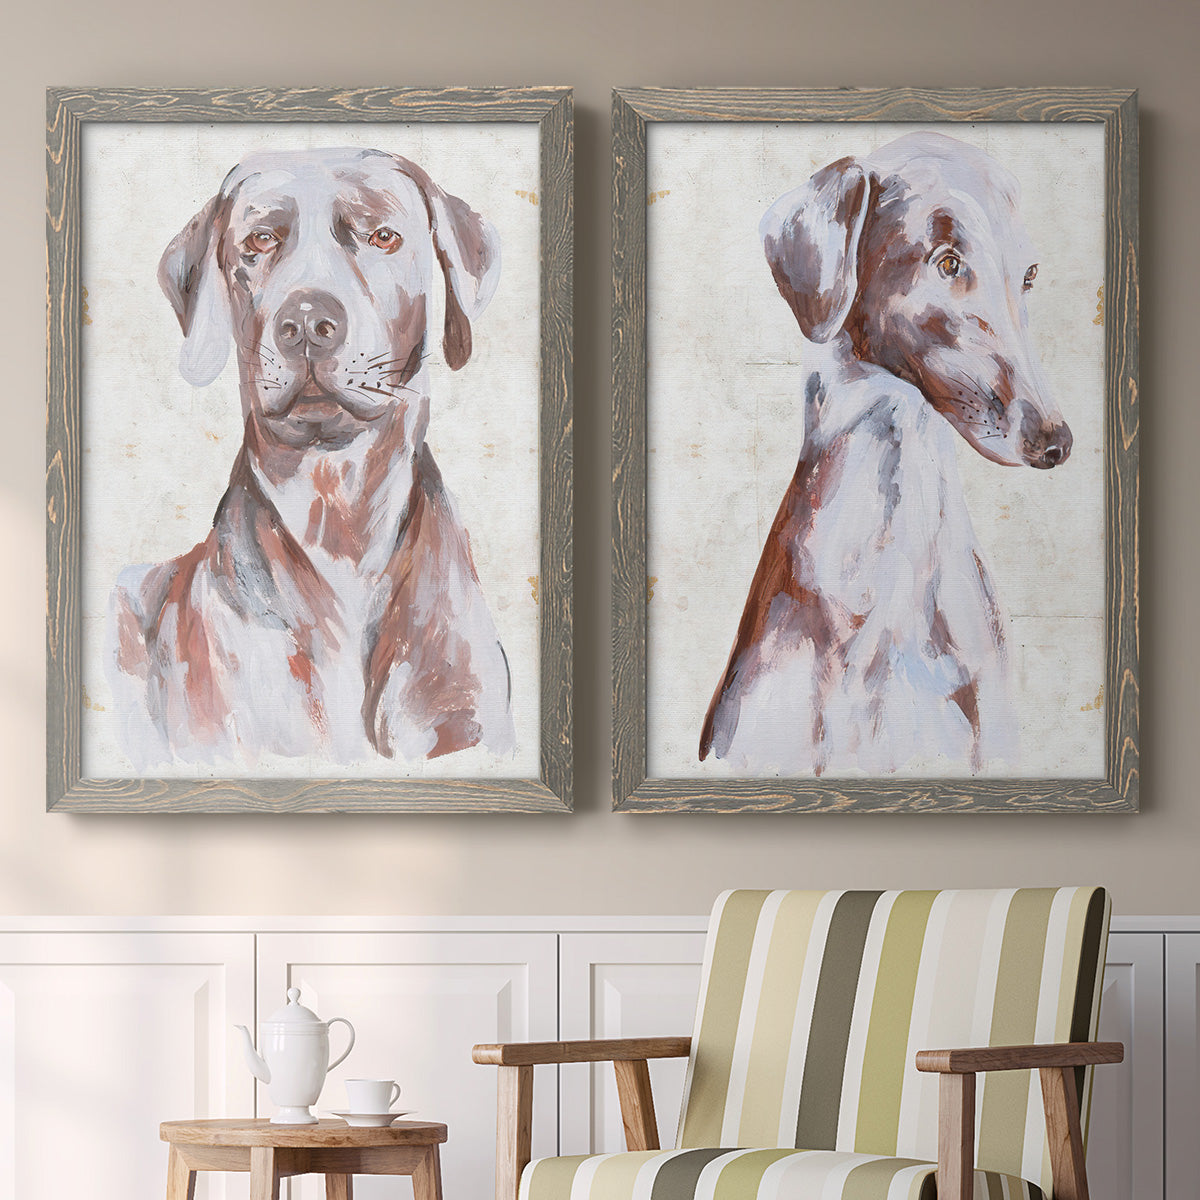 Sitting Dog I - Premium Framed Canvas 2 Piece Set - Ready to Hang